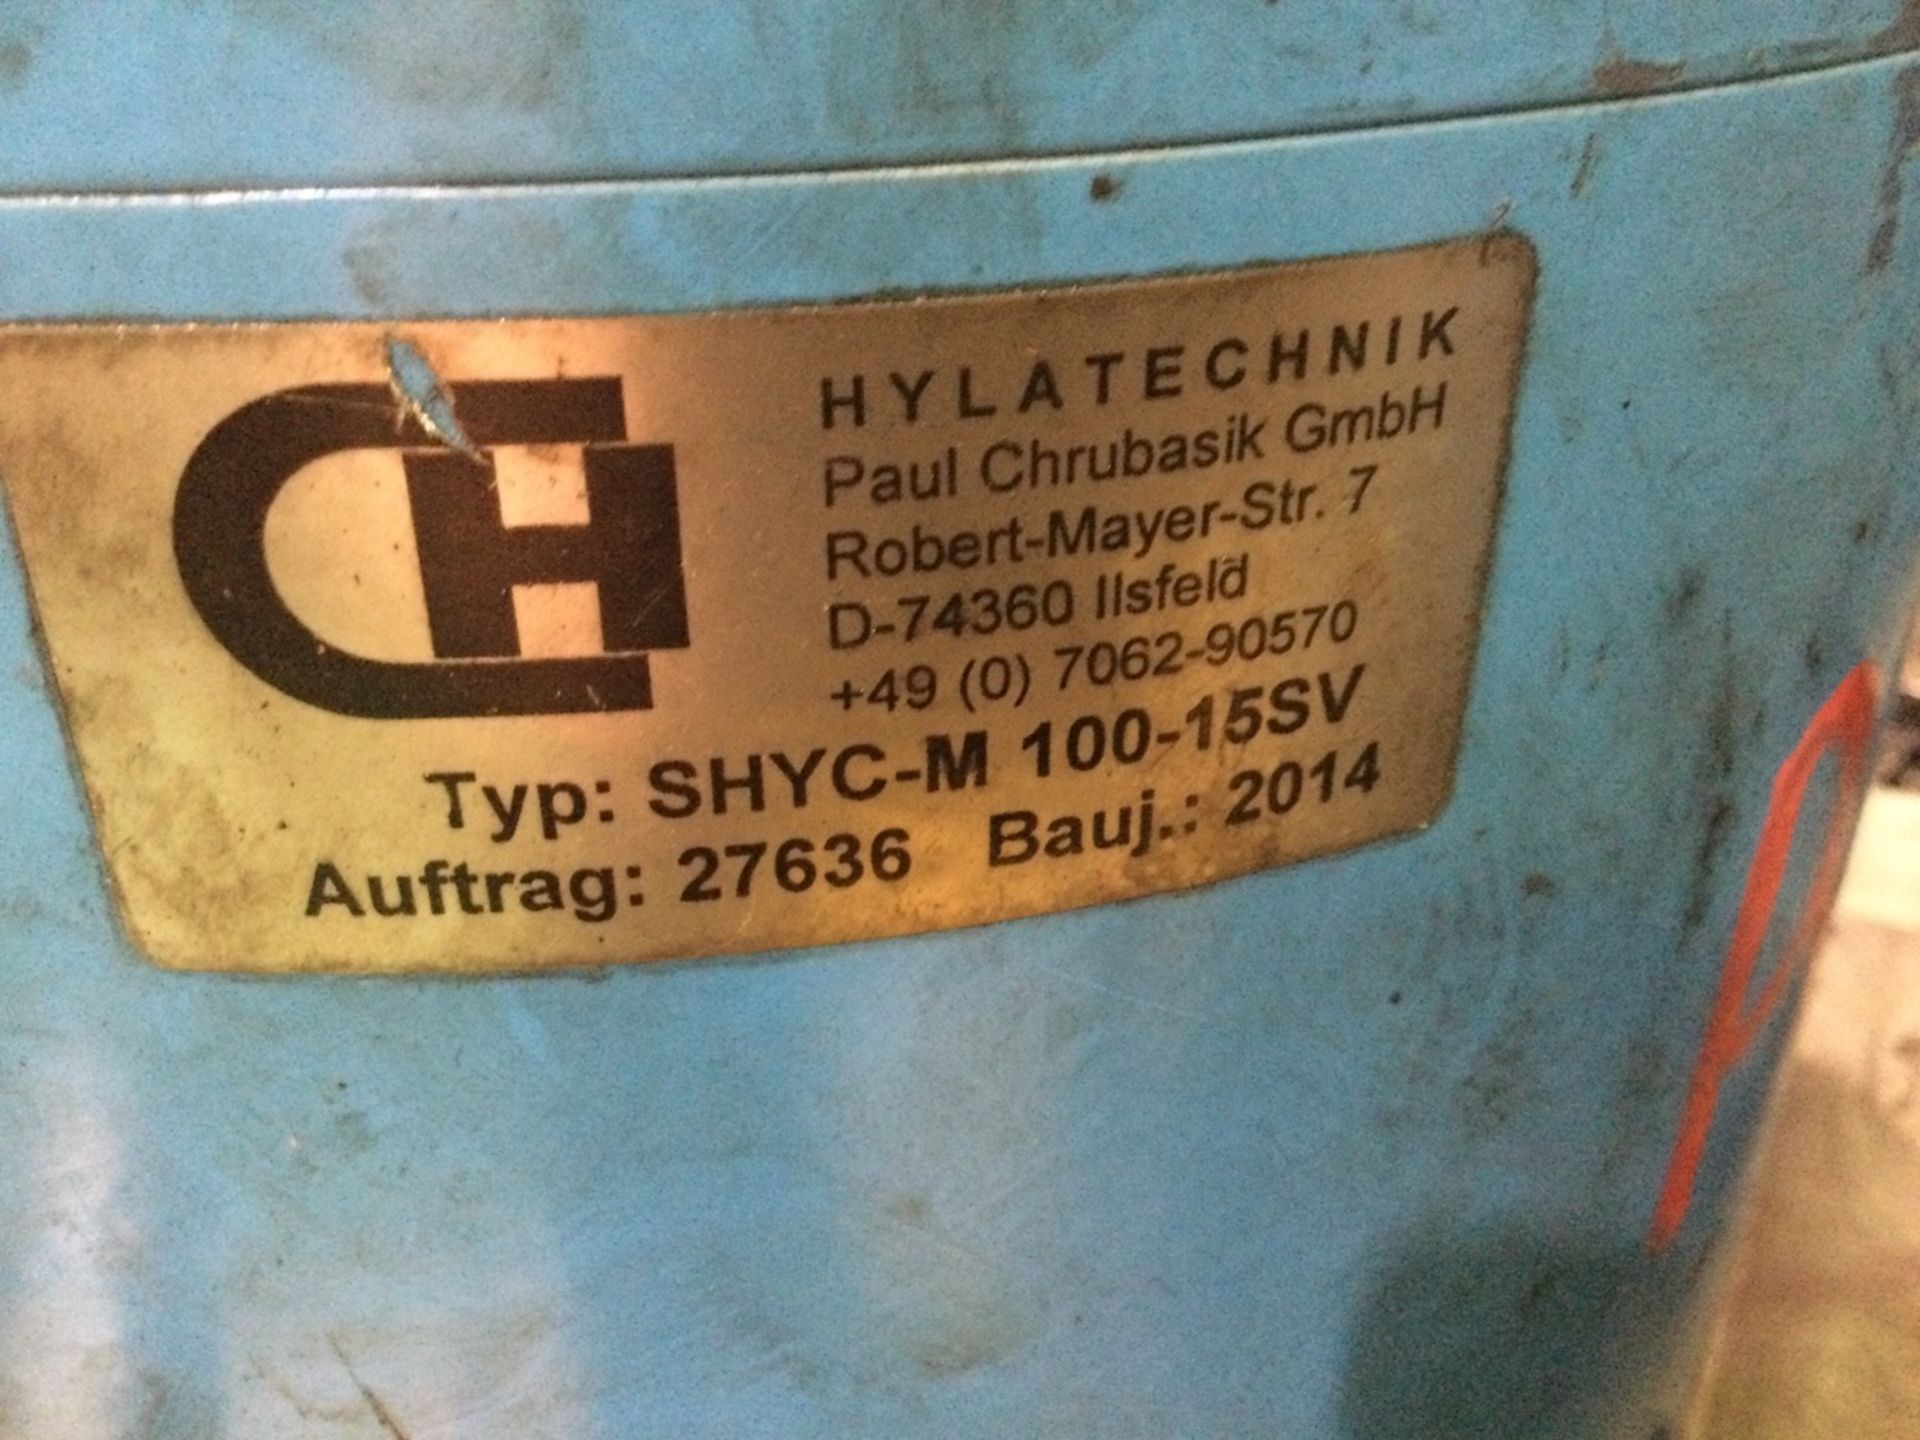 1 Hylatechnik, High pressure oil pump with 4: SHYC-M blanking shock dampers, Serial Number: 27636, Y - Image 12 of 14